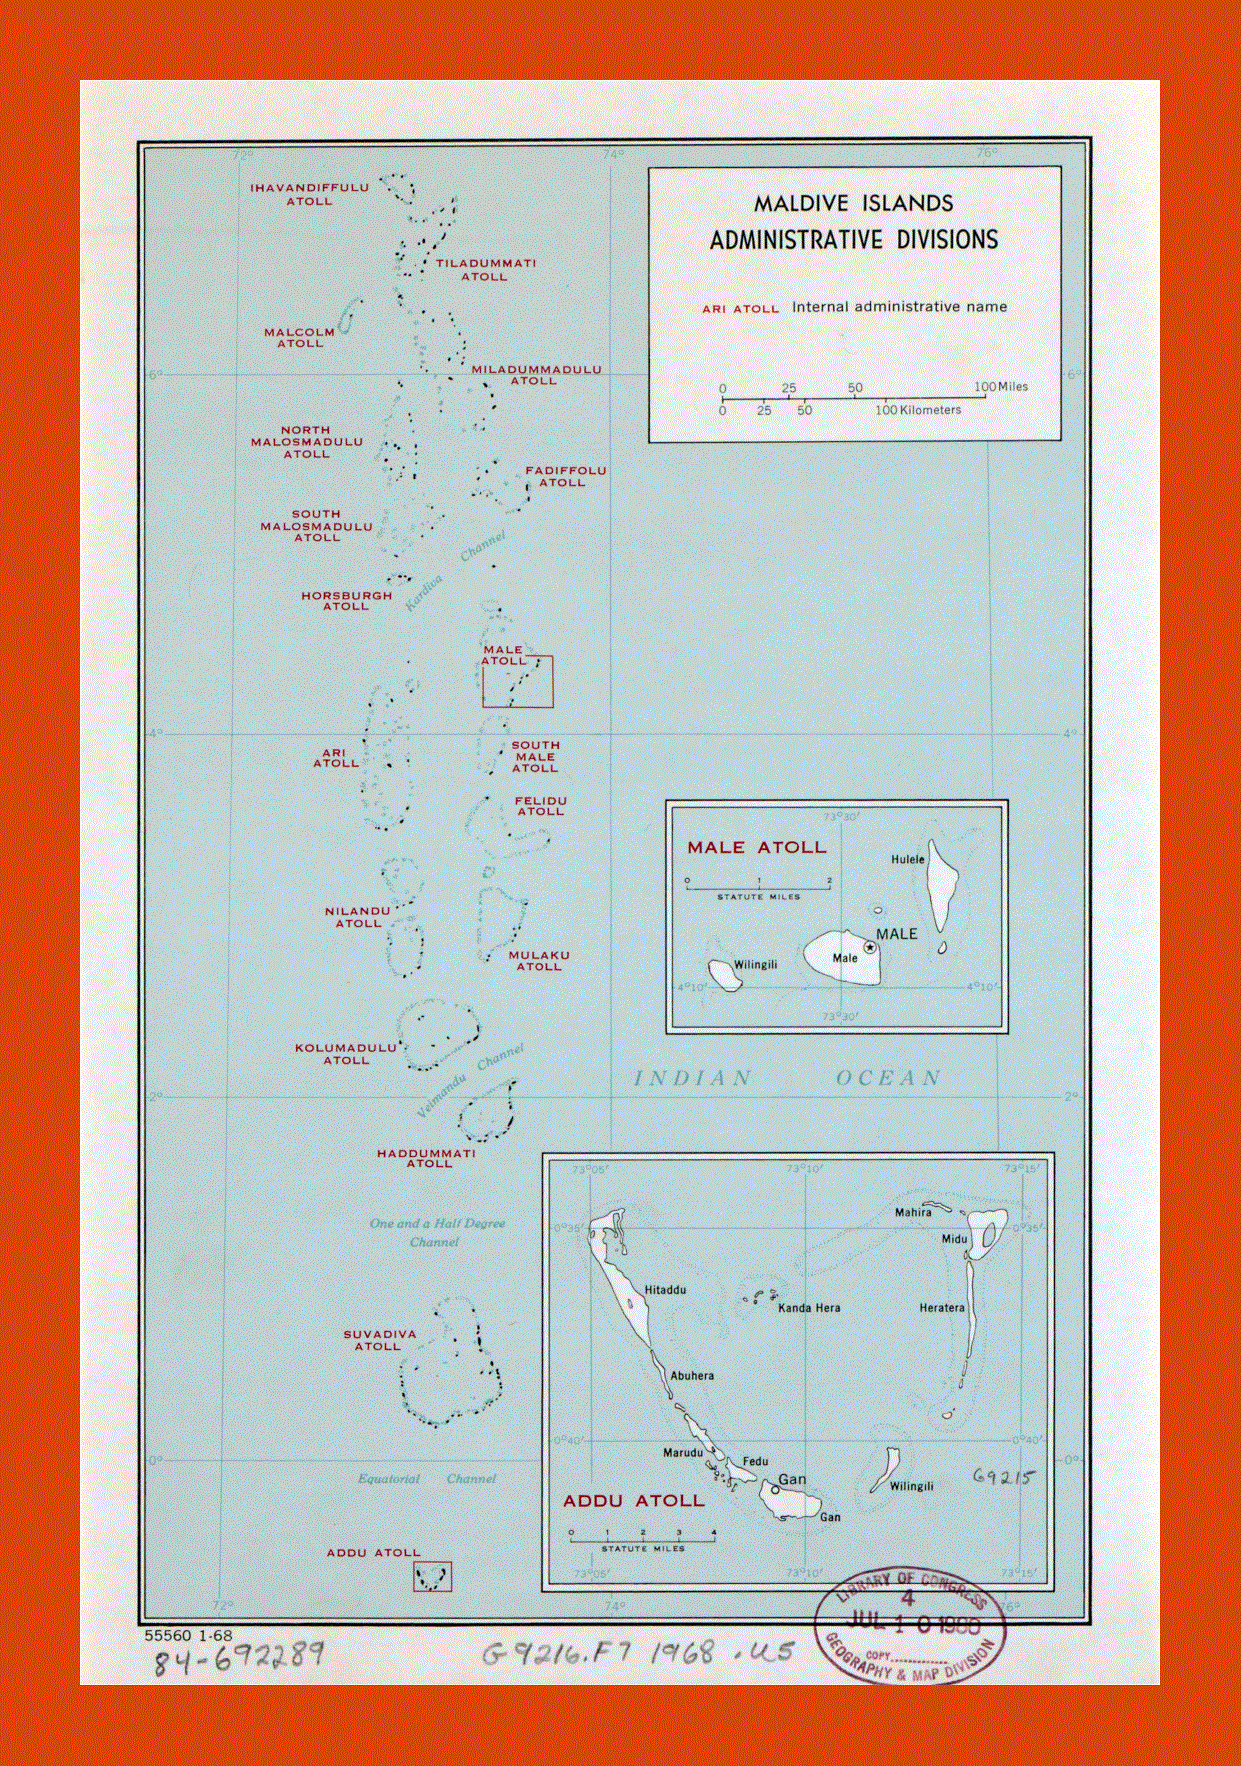 Administrative divisions map of Maldives - 1968